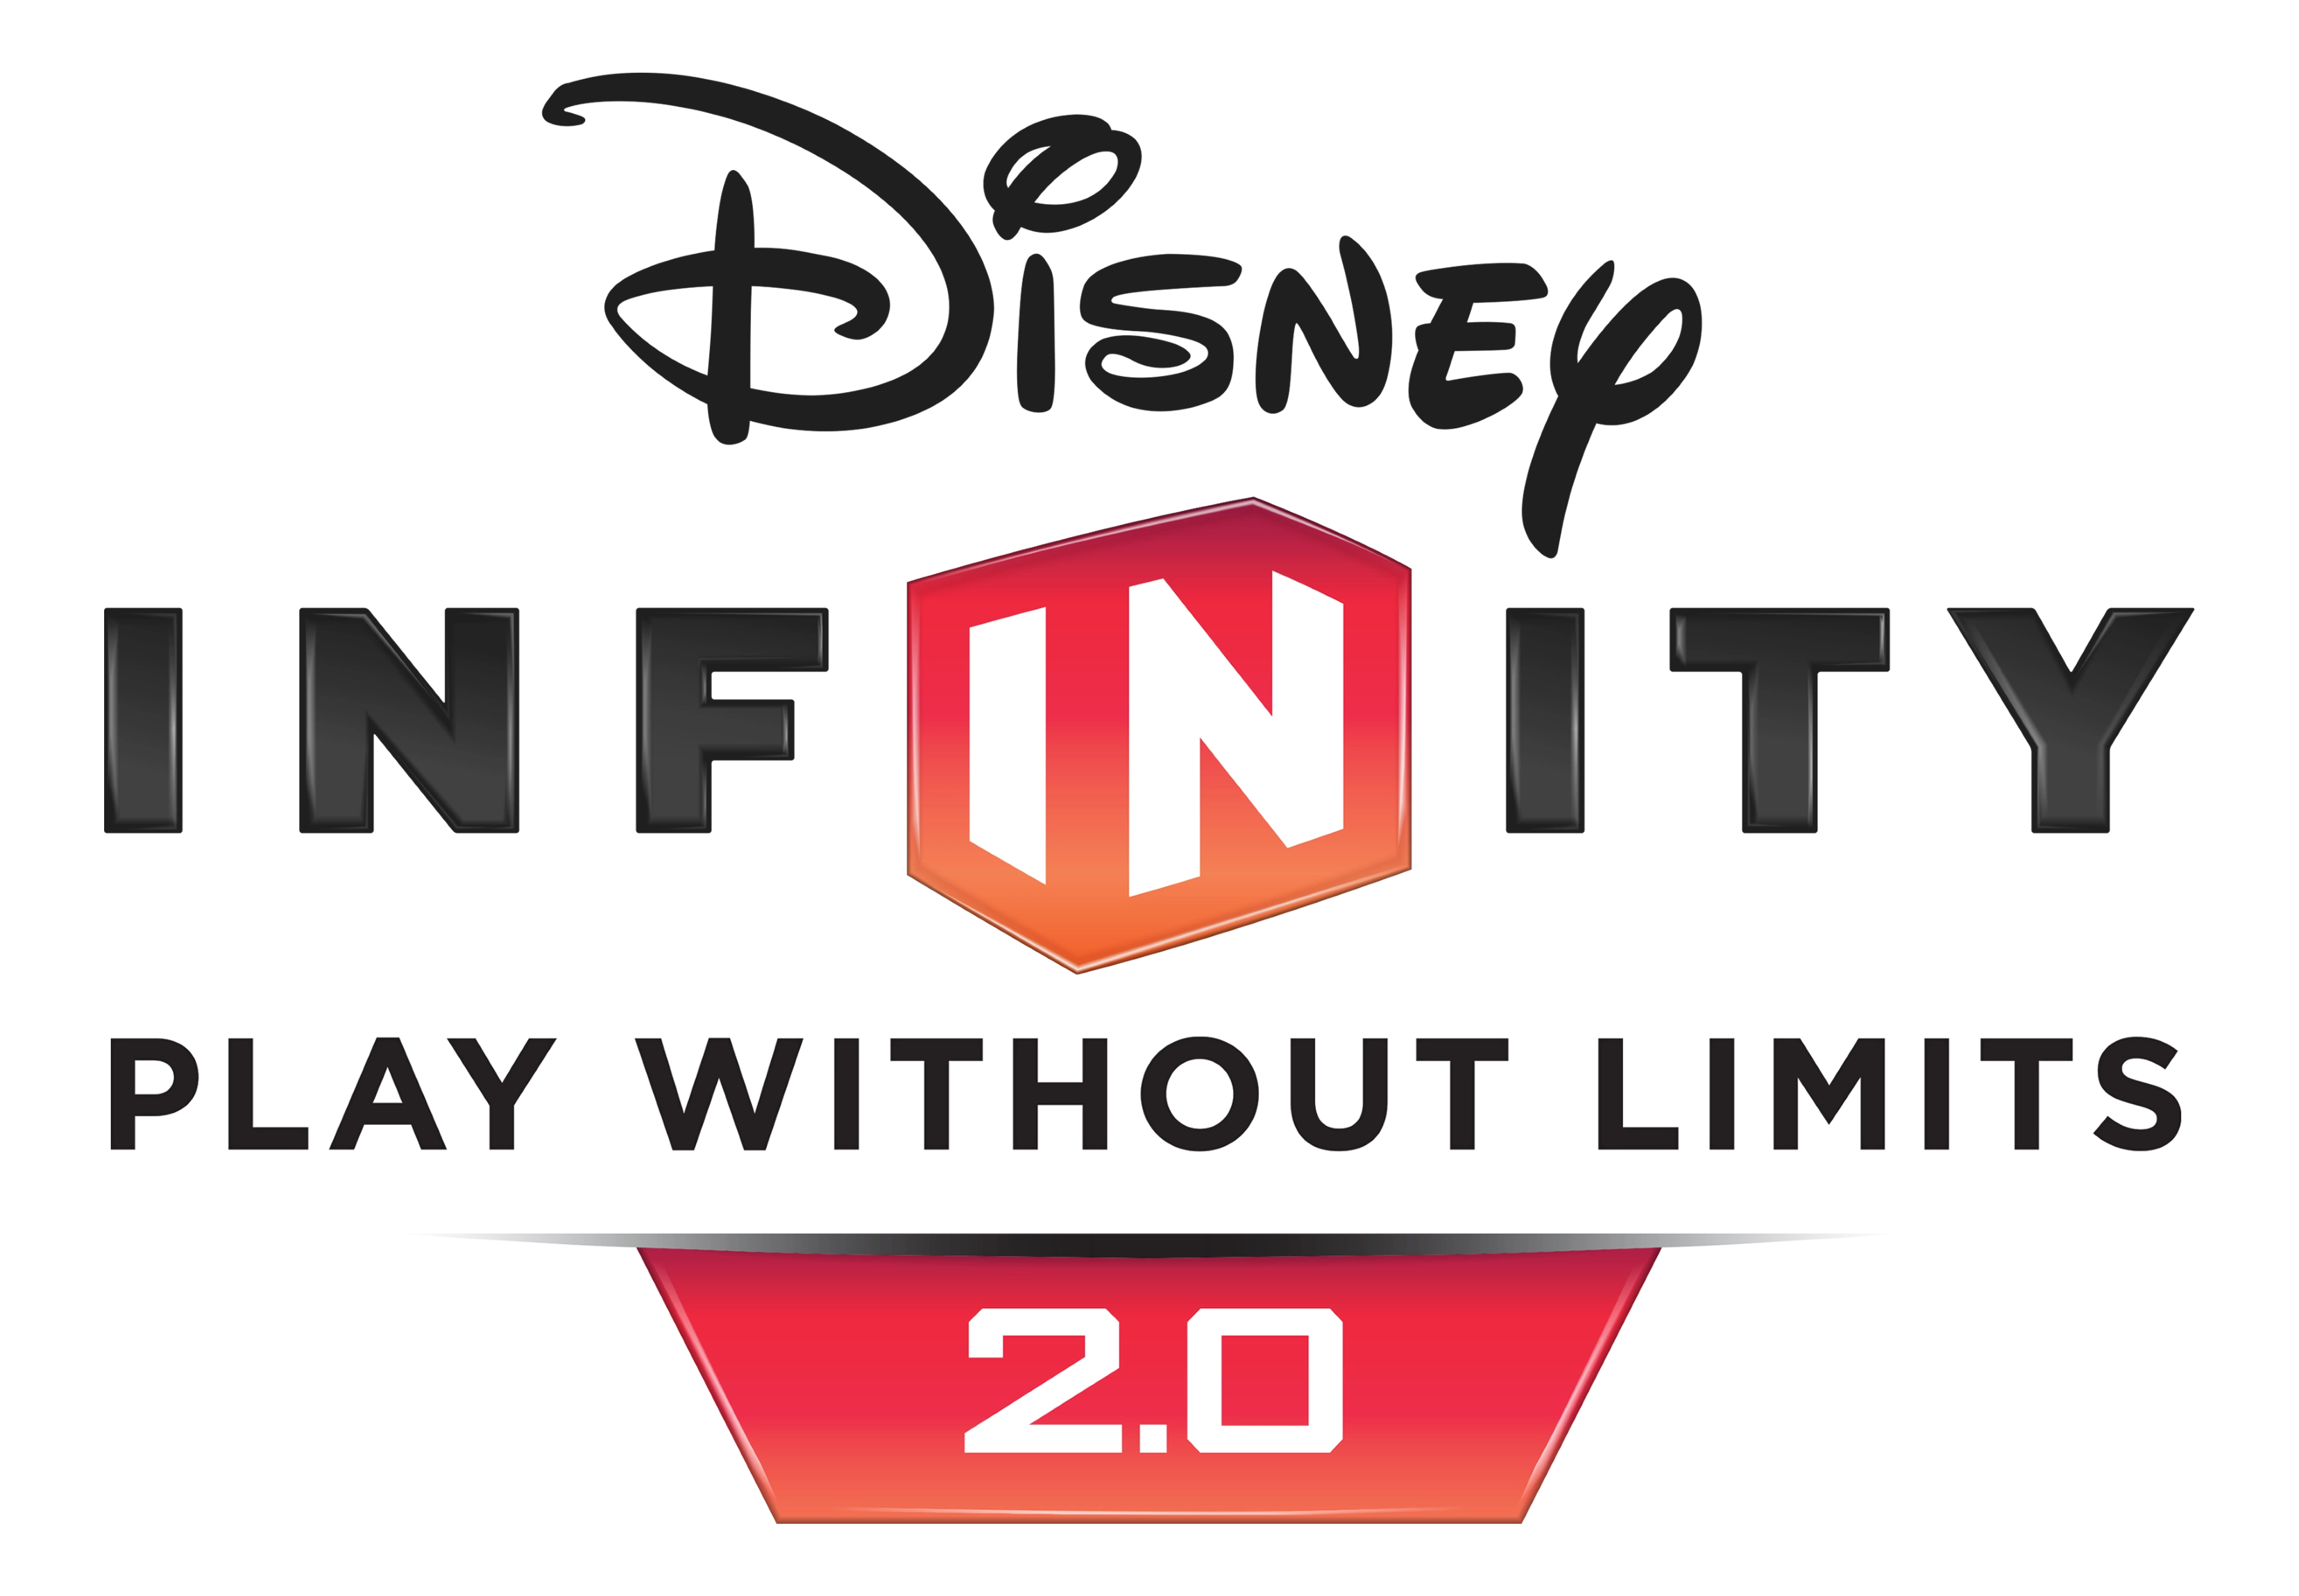 disney infinity 1.0 download free